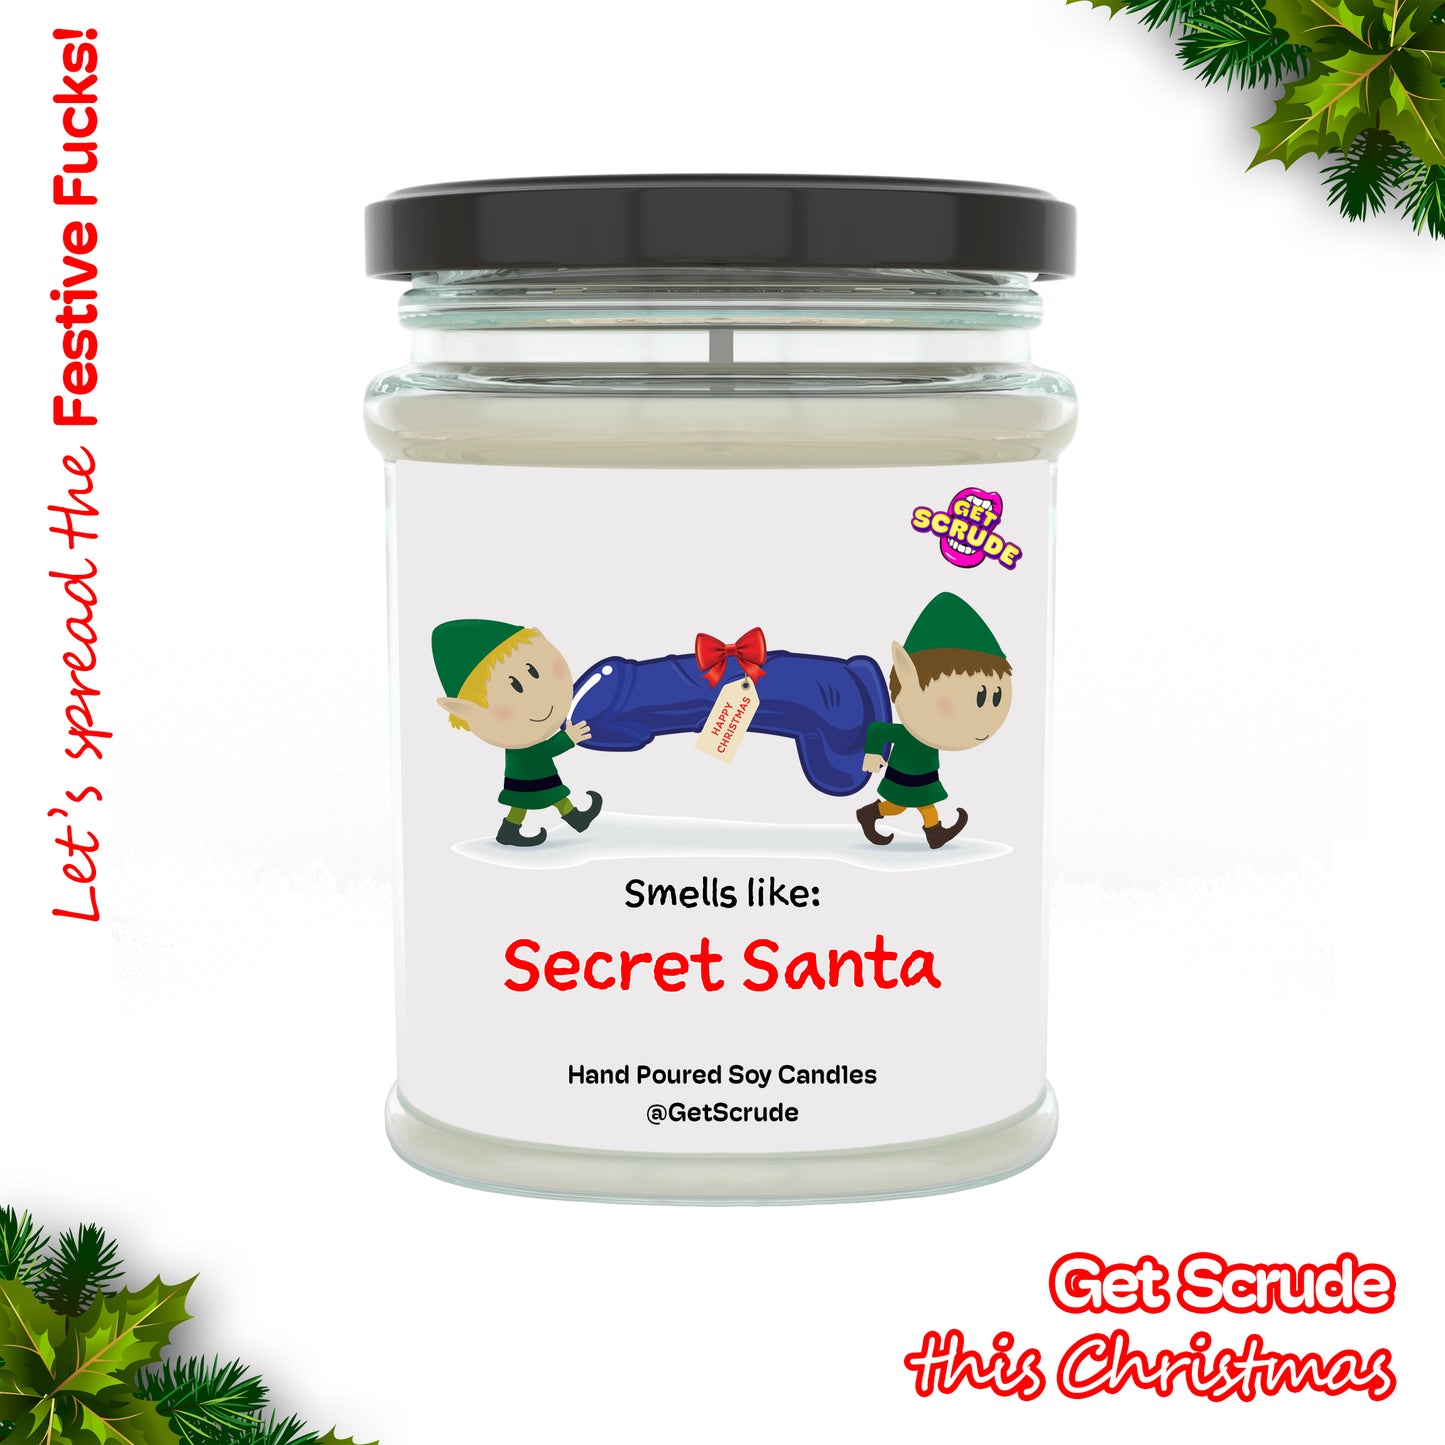 Smells like Secret Santa